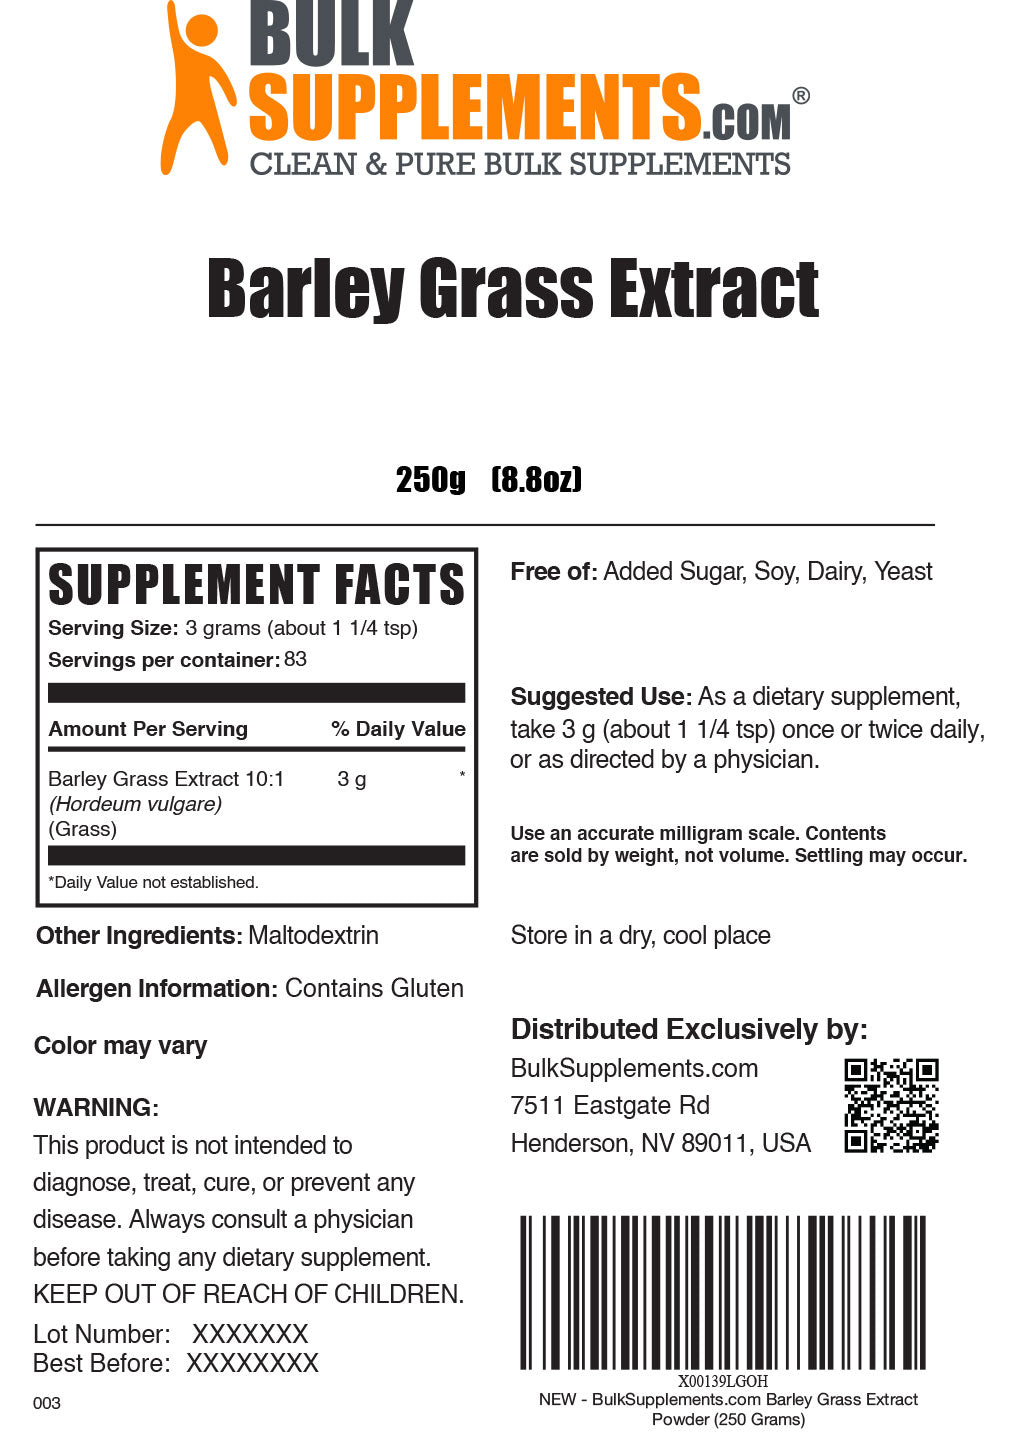 Barley Grass Extract Powder